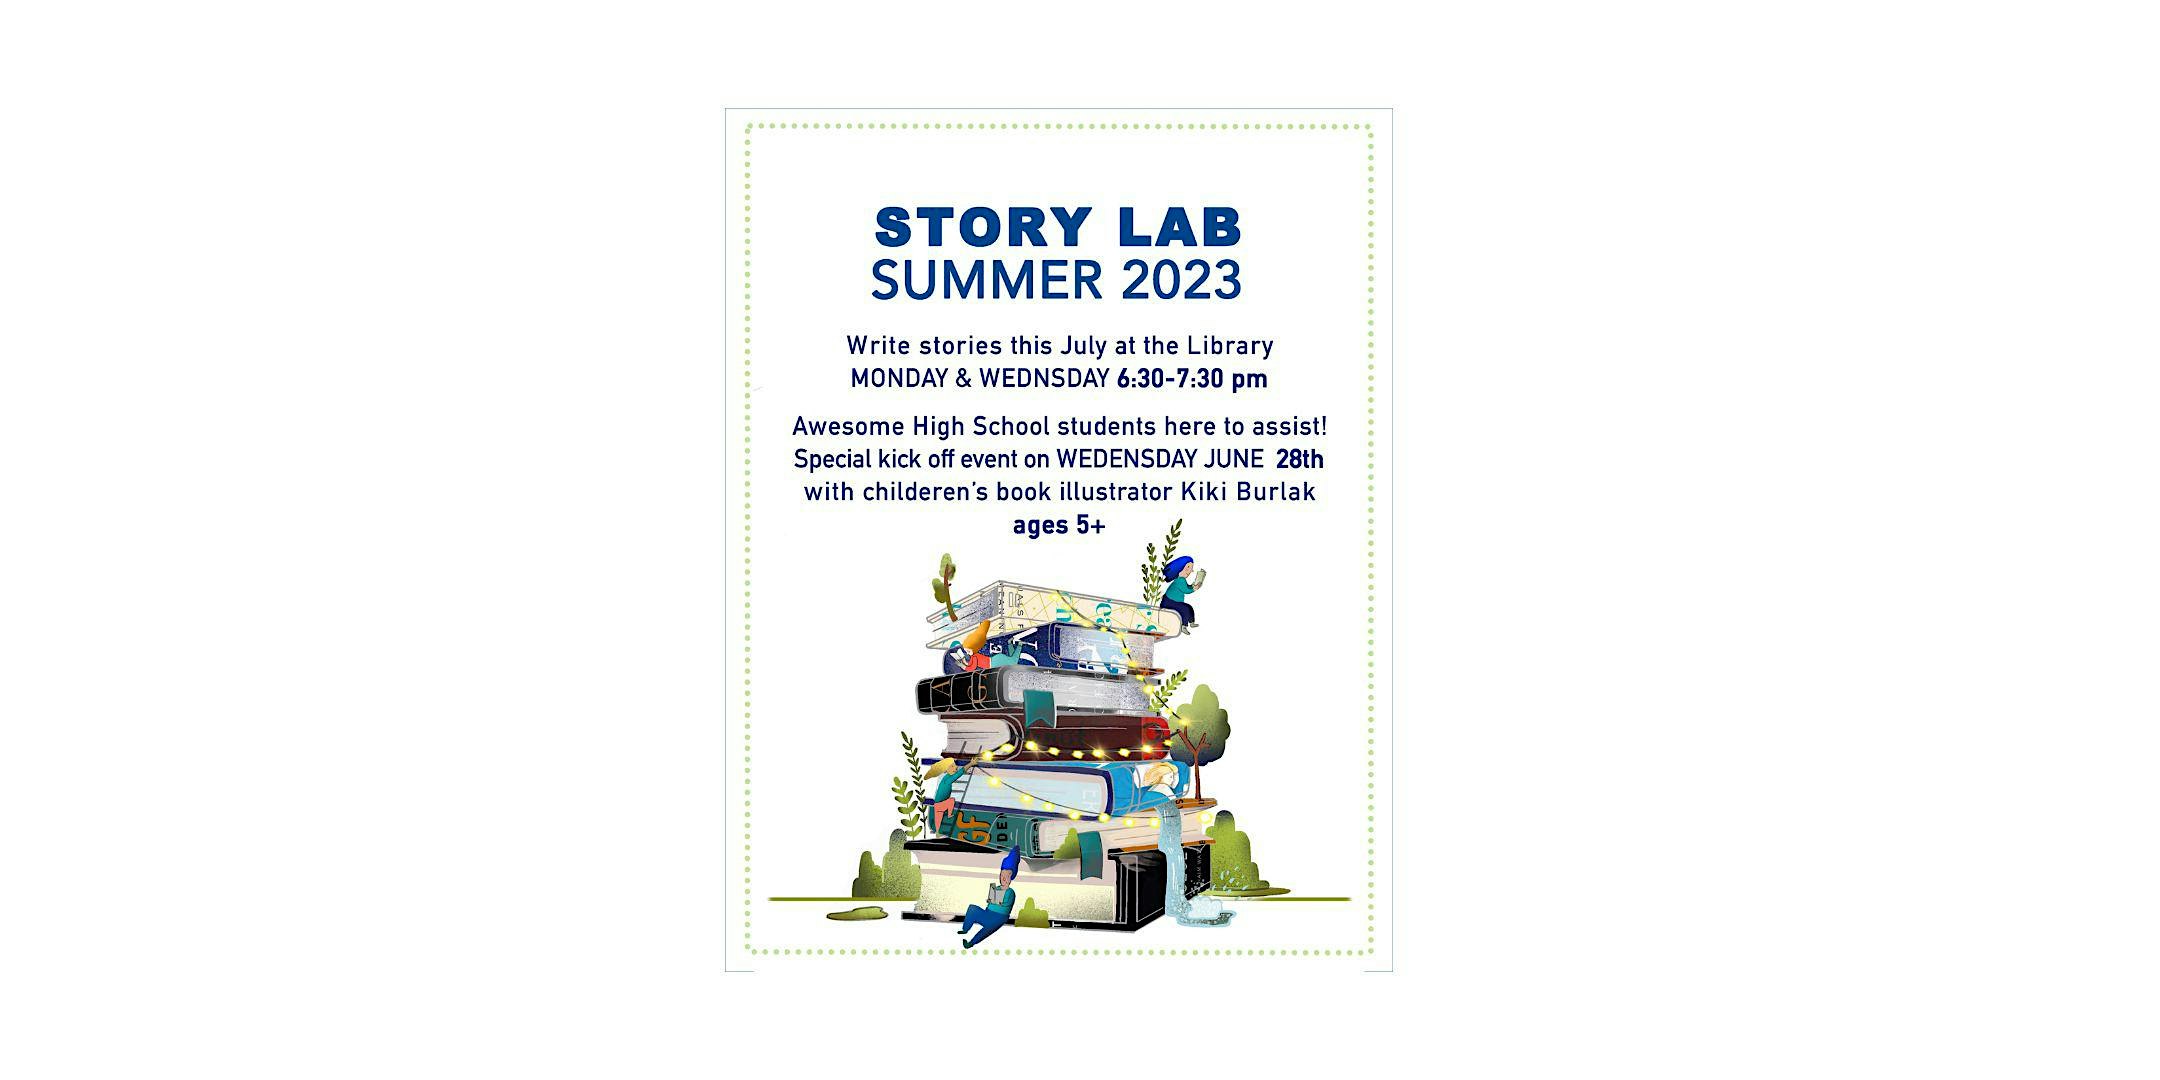 Story Lab with local artist Kiki Burlak!